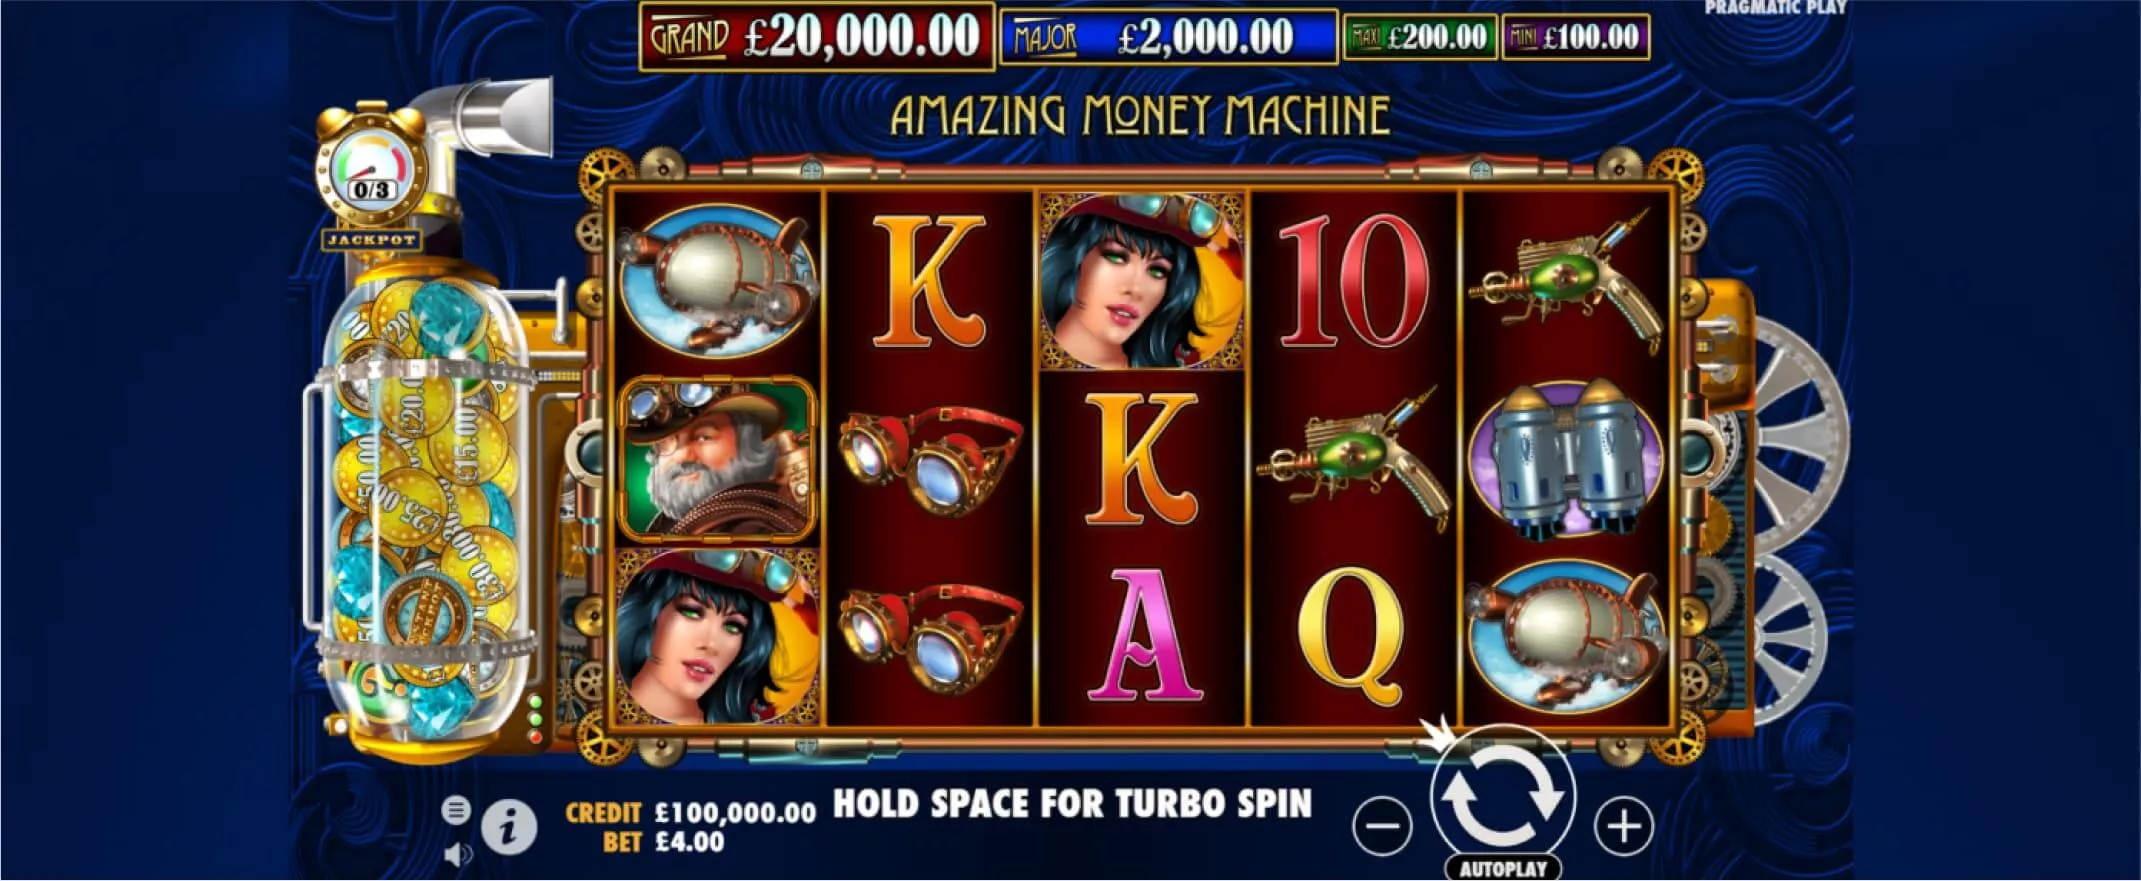 The Amazing Money Machine slot screenshot of the reels